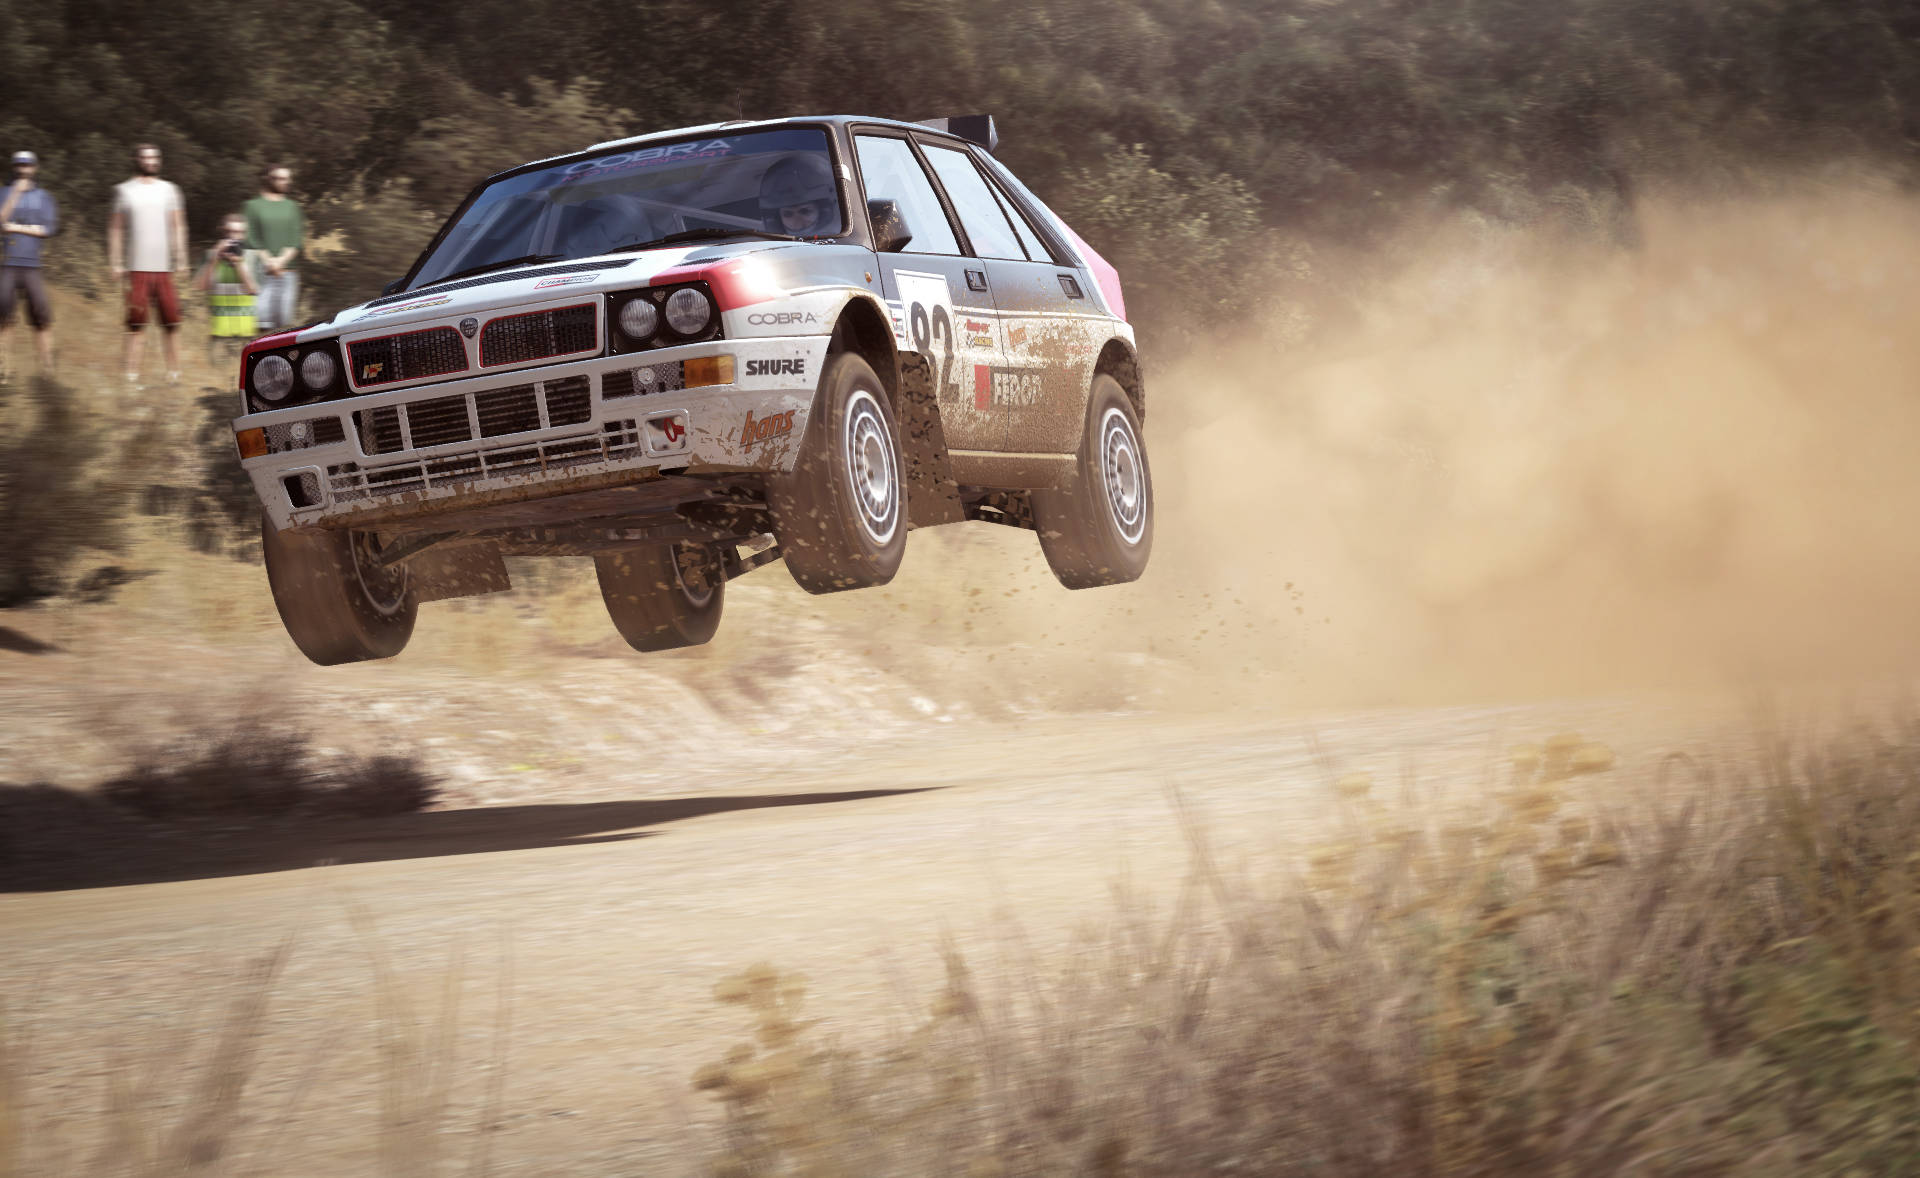 Dynamic Car Drifting On Muddy Track In Dirt Rally Race